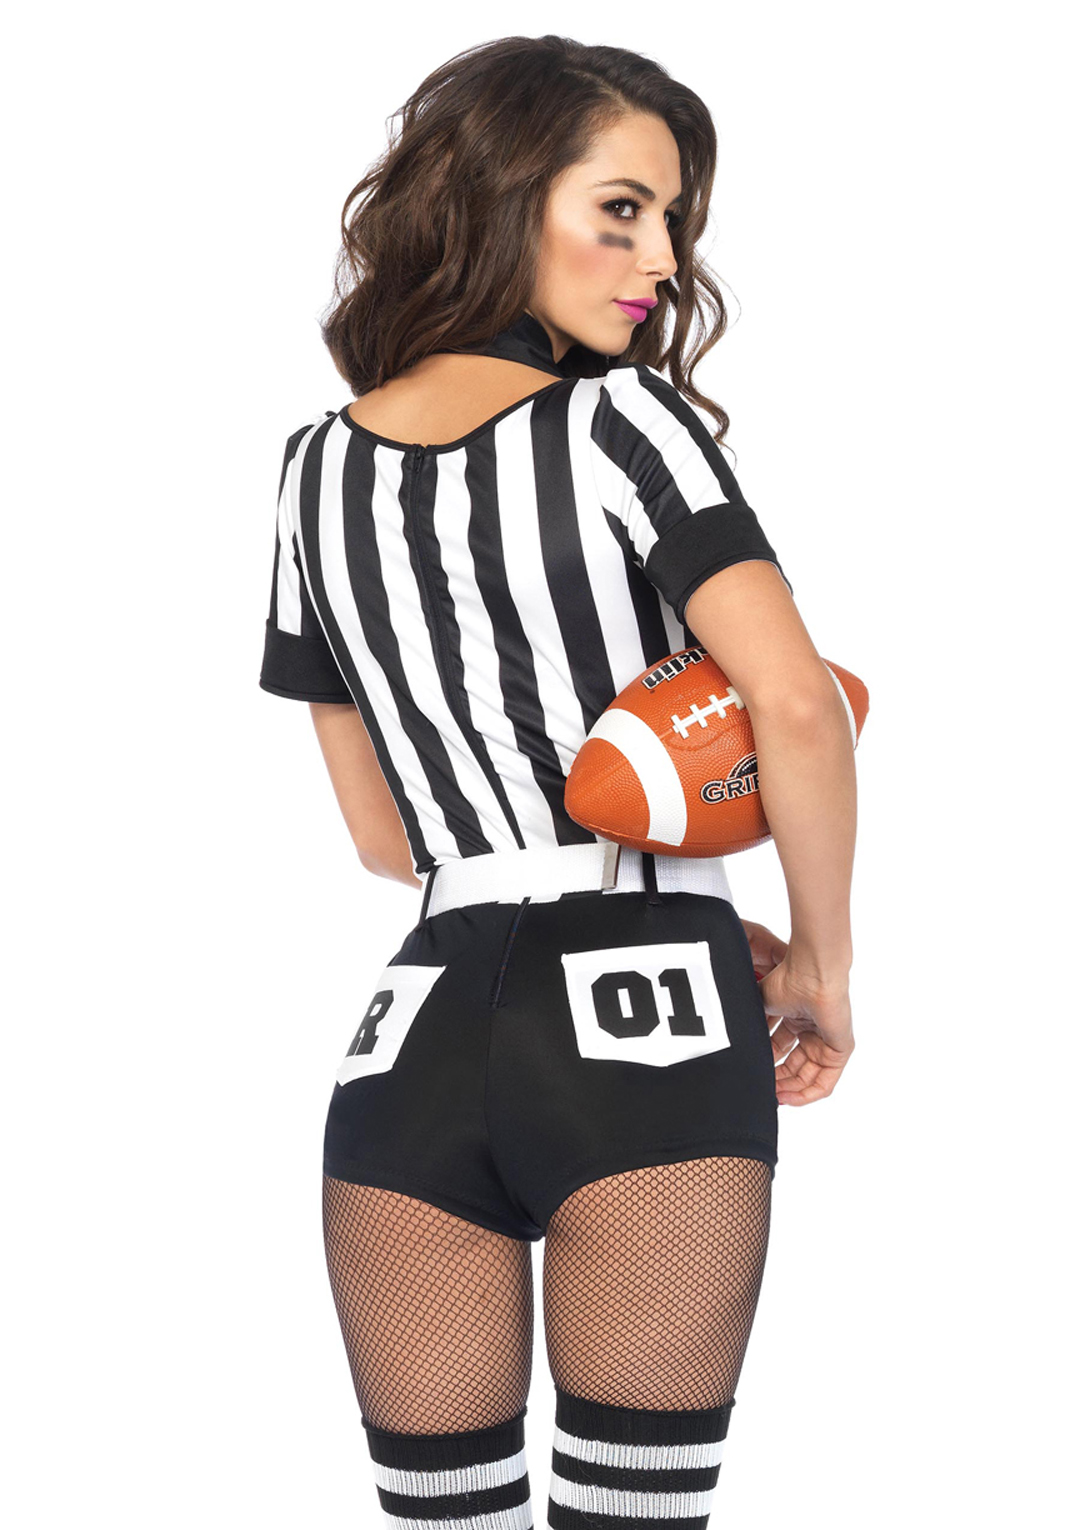 Leg Avenue Women's 3 Piece No Rules Referee Costume, Black/White, Medium - image 2 of 3